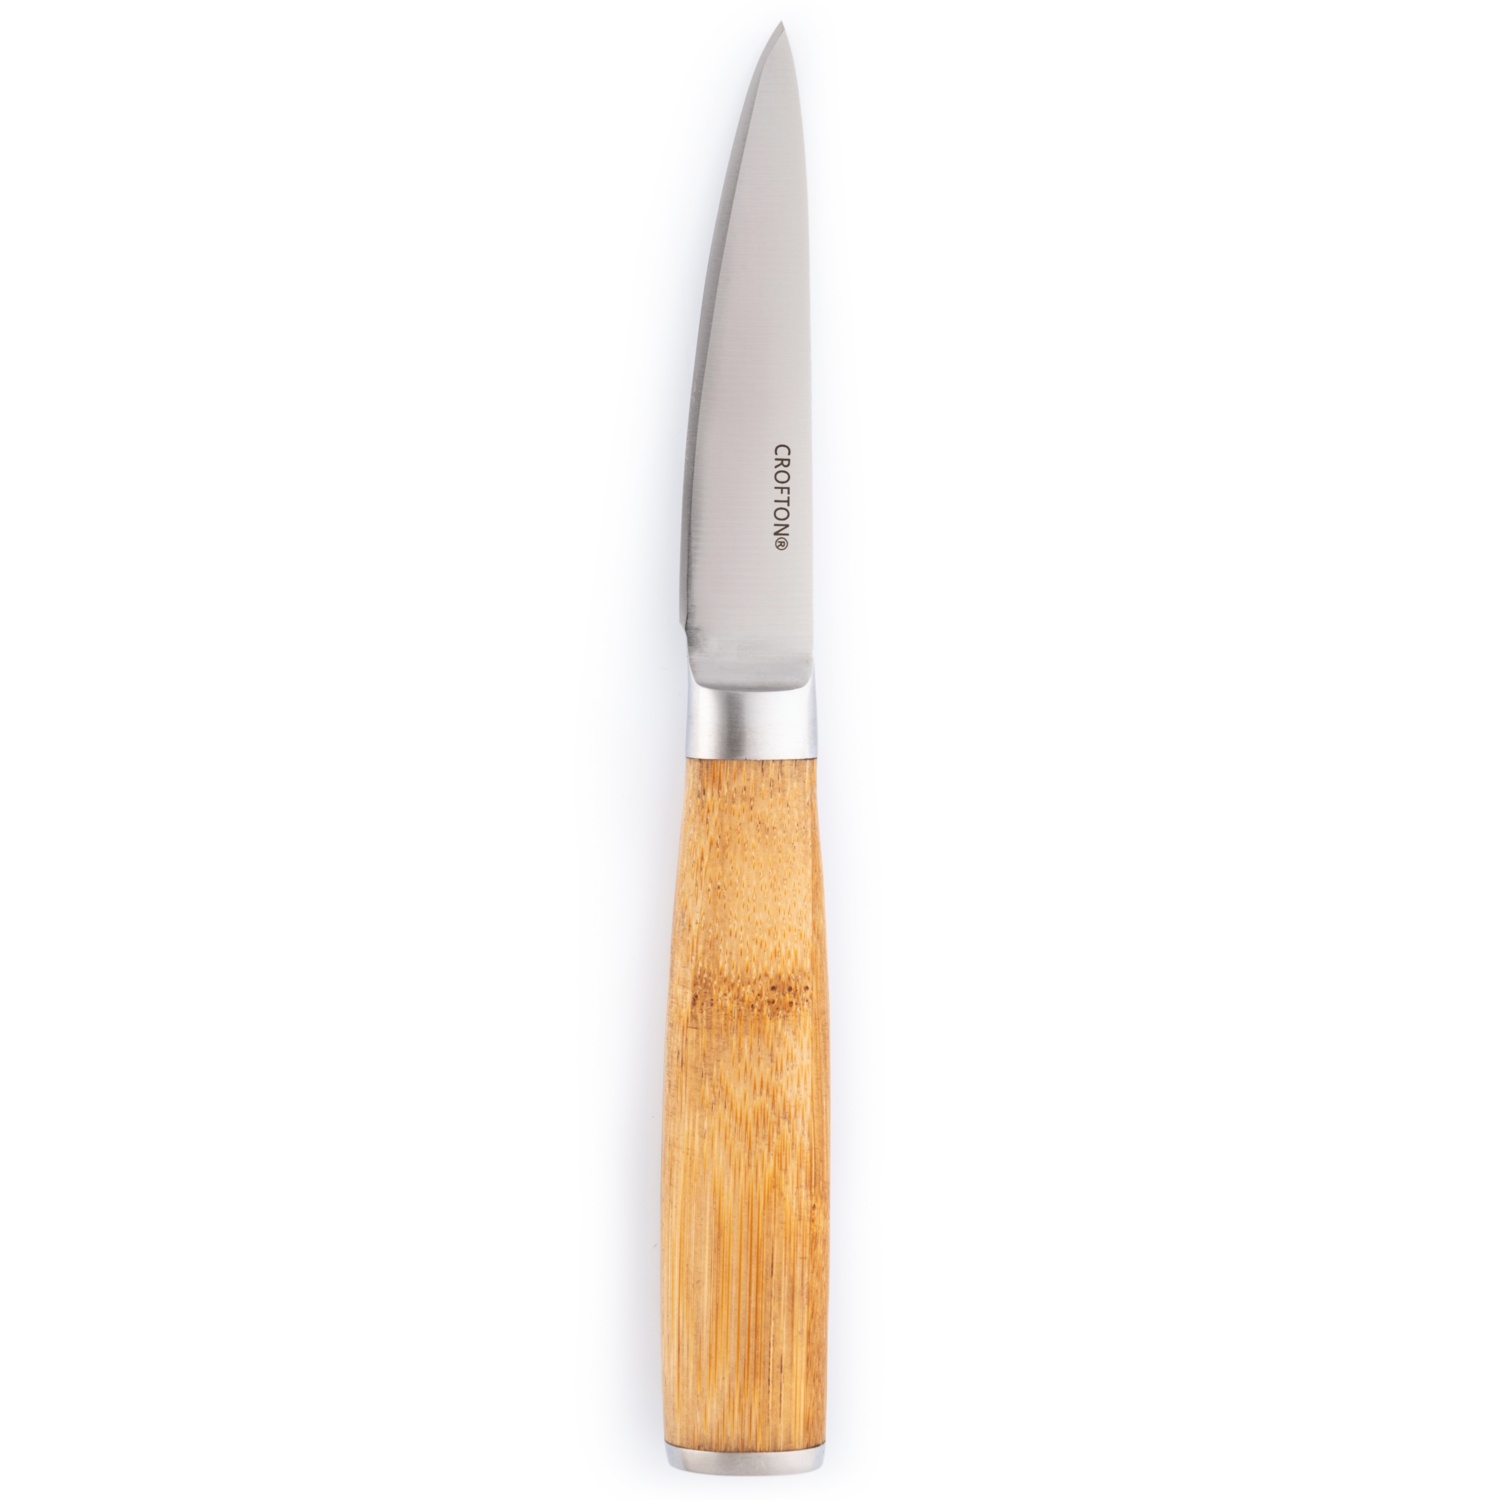 CROFTON Asiatische Messer, 2-teilig